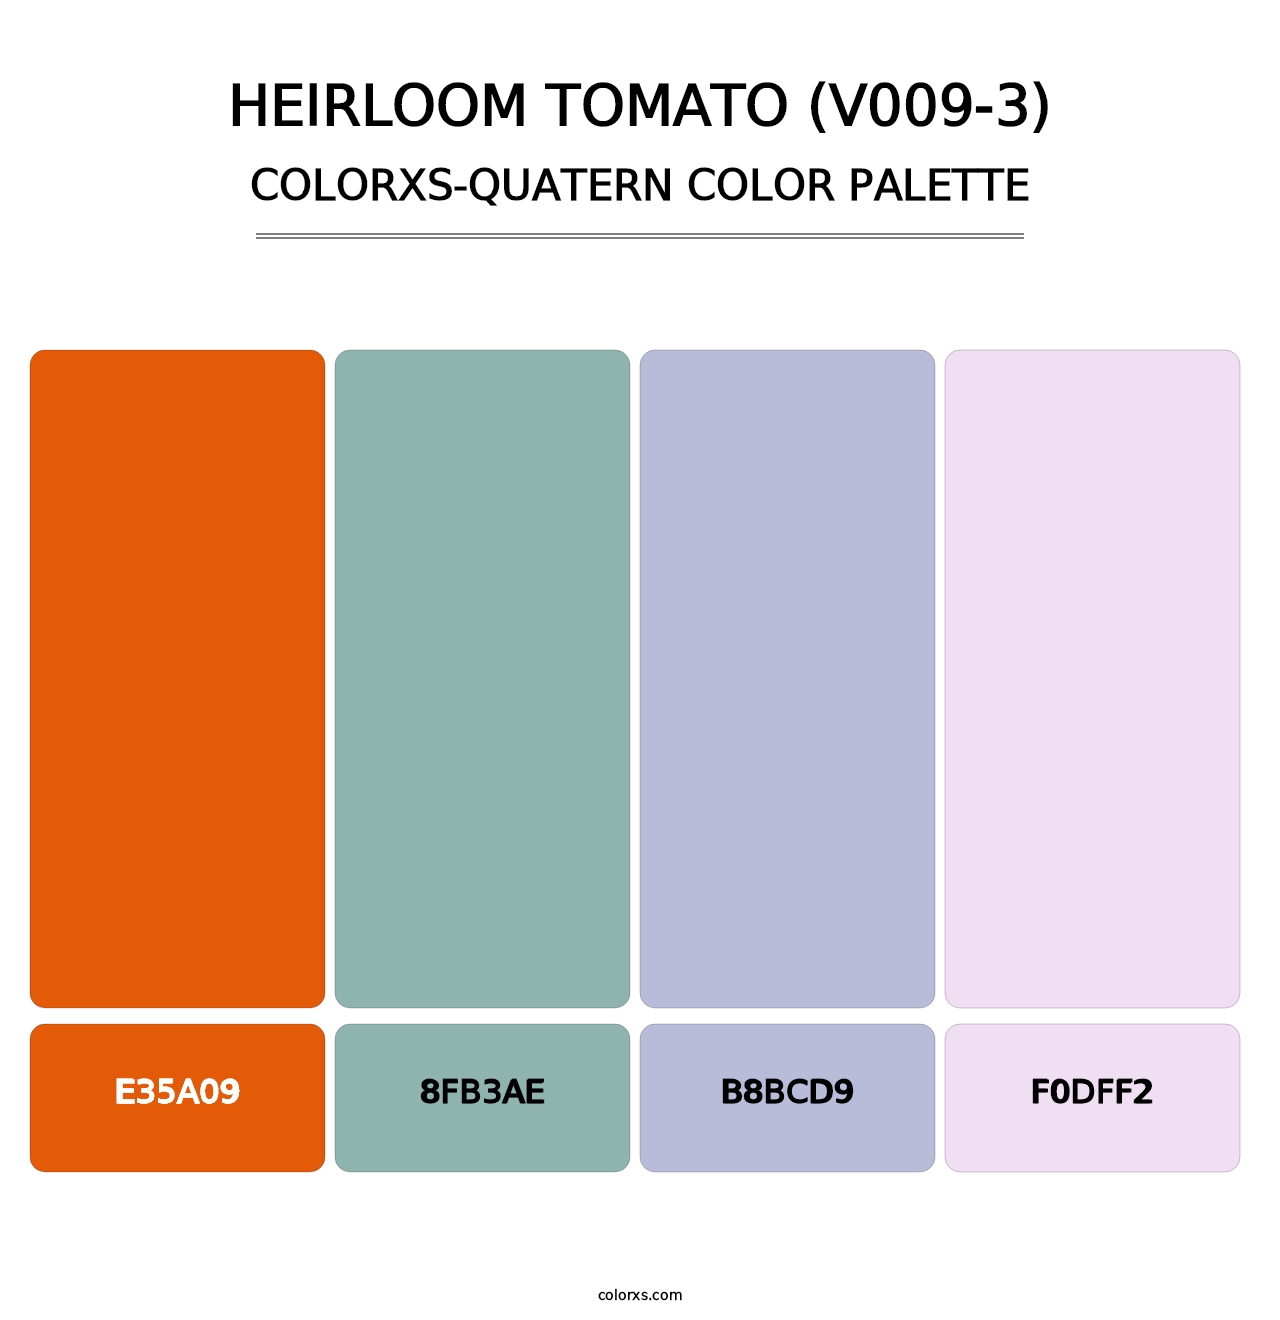 Heirloom Tomato (V009-3) - Colorxs Quatern Palette